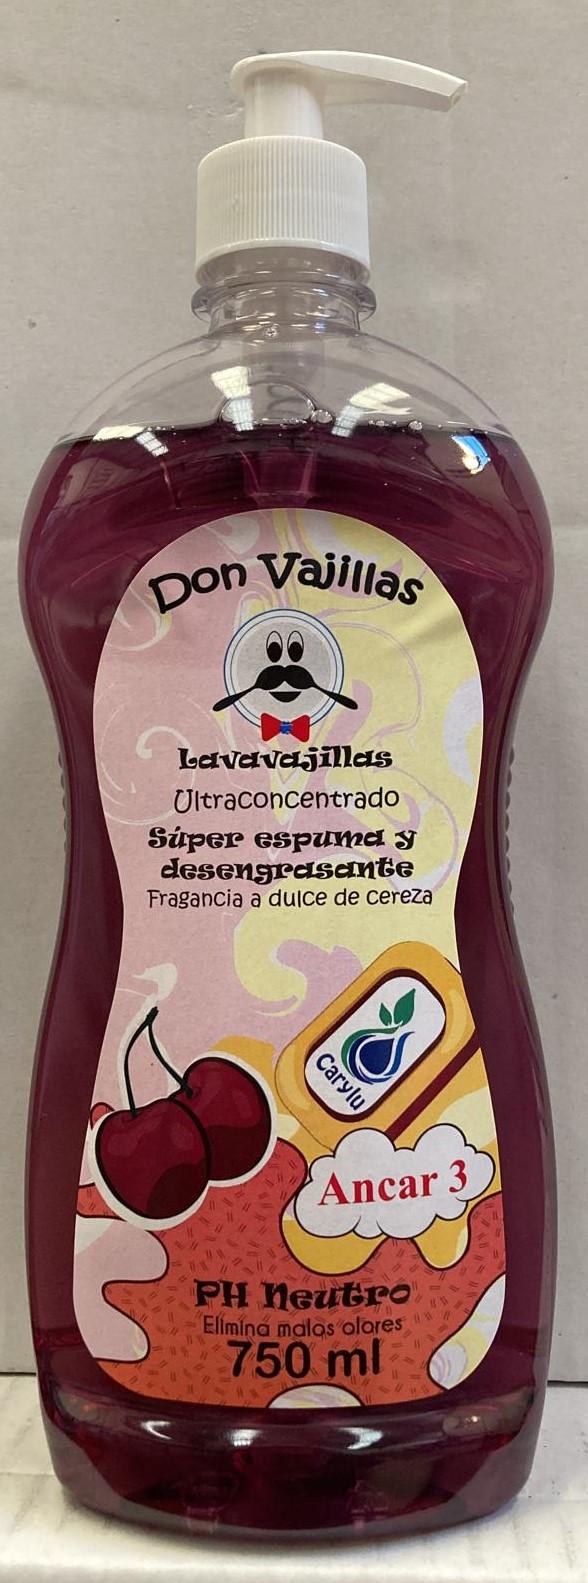 Ancar 3 - Don Vajillas 750 ml 